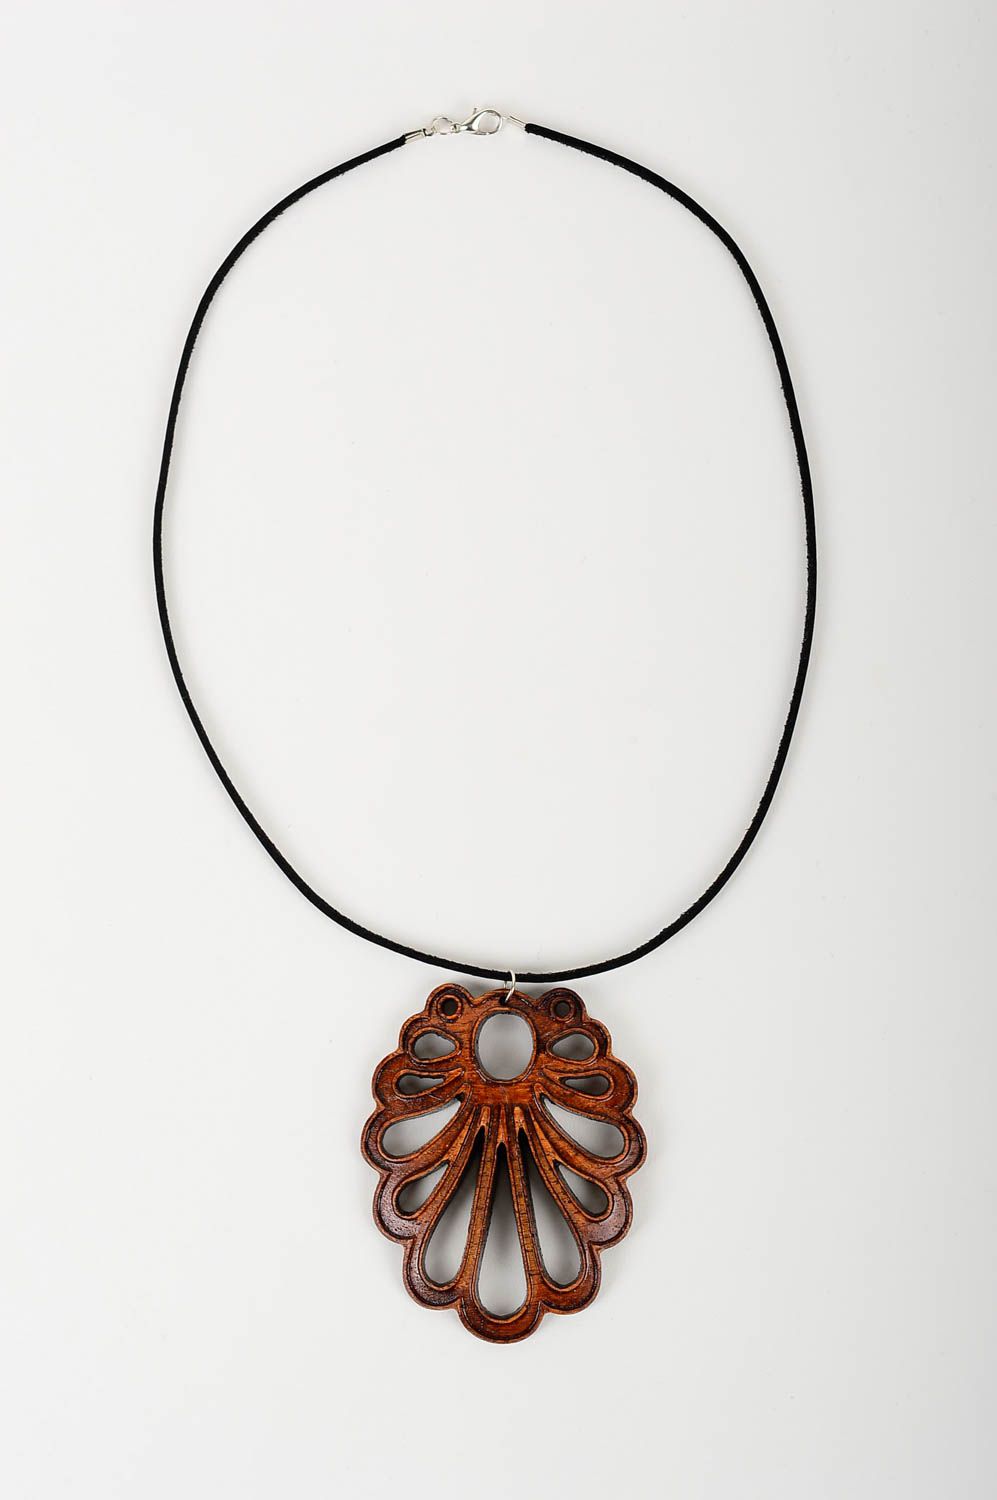 Neck accessory wooden accessory neck accessory unusual pendant beautiful pendant photo 2